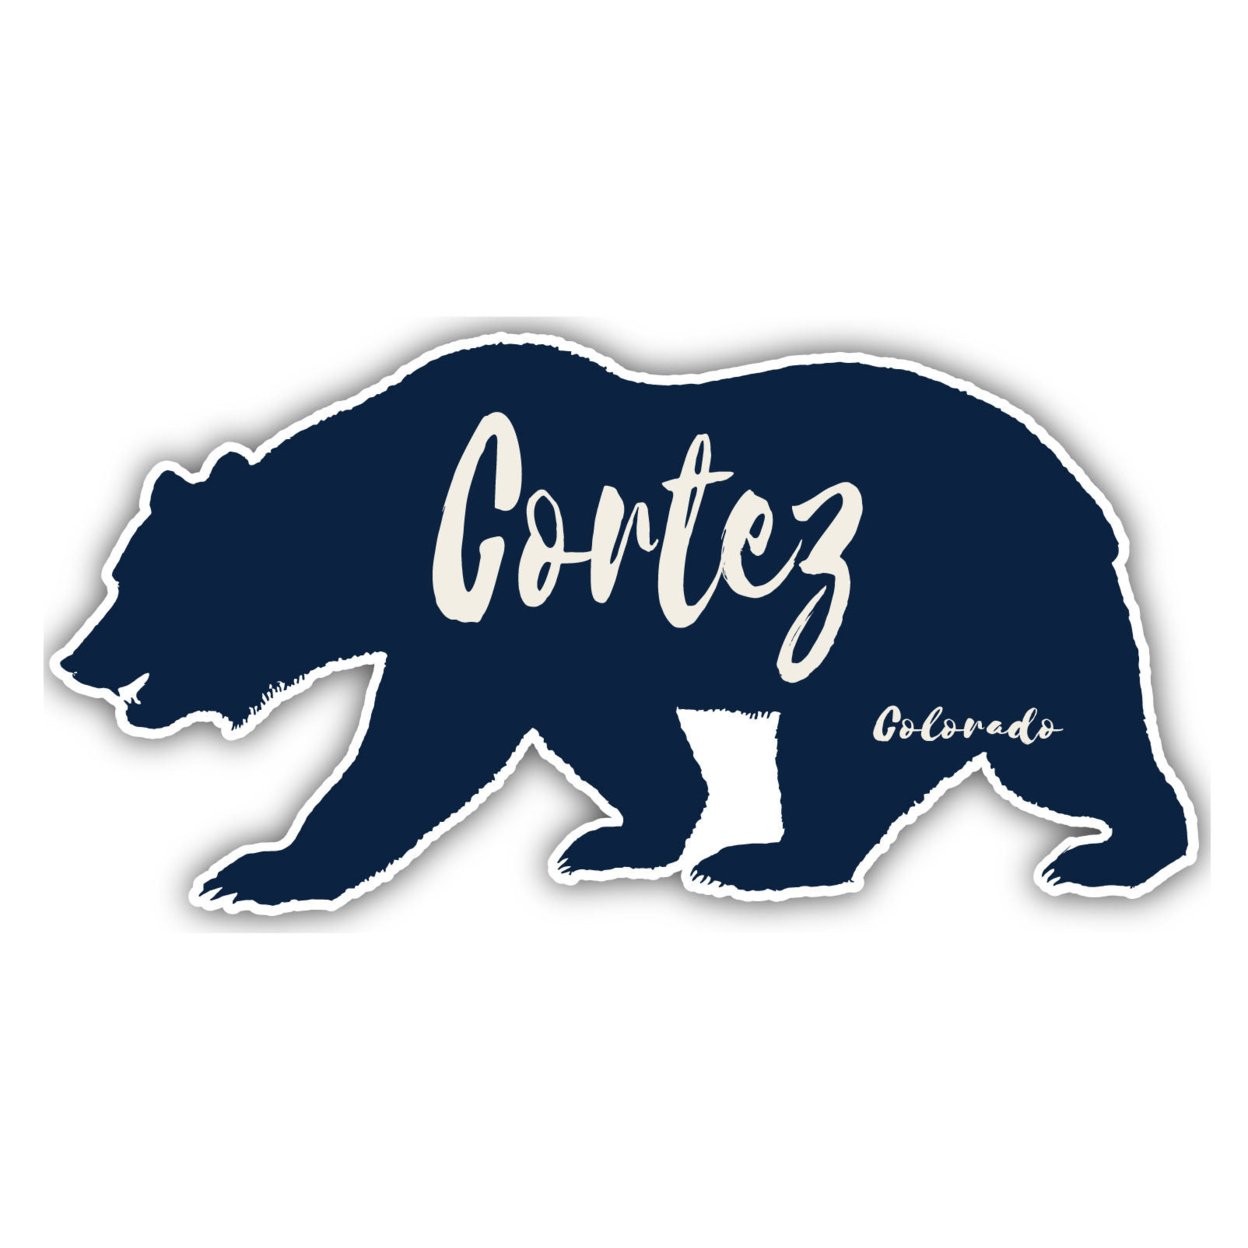 Cortez Colorado Souvenir Decorative Stickers (Choose Theme And Size) - Single Unit, 4-Inch, Bear